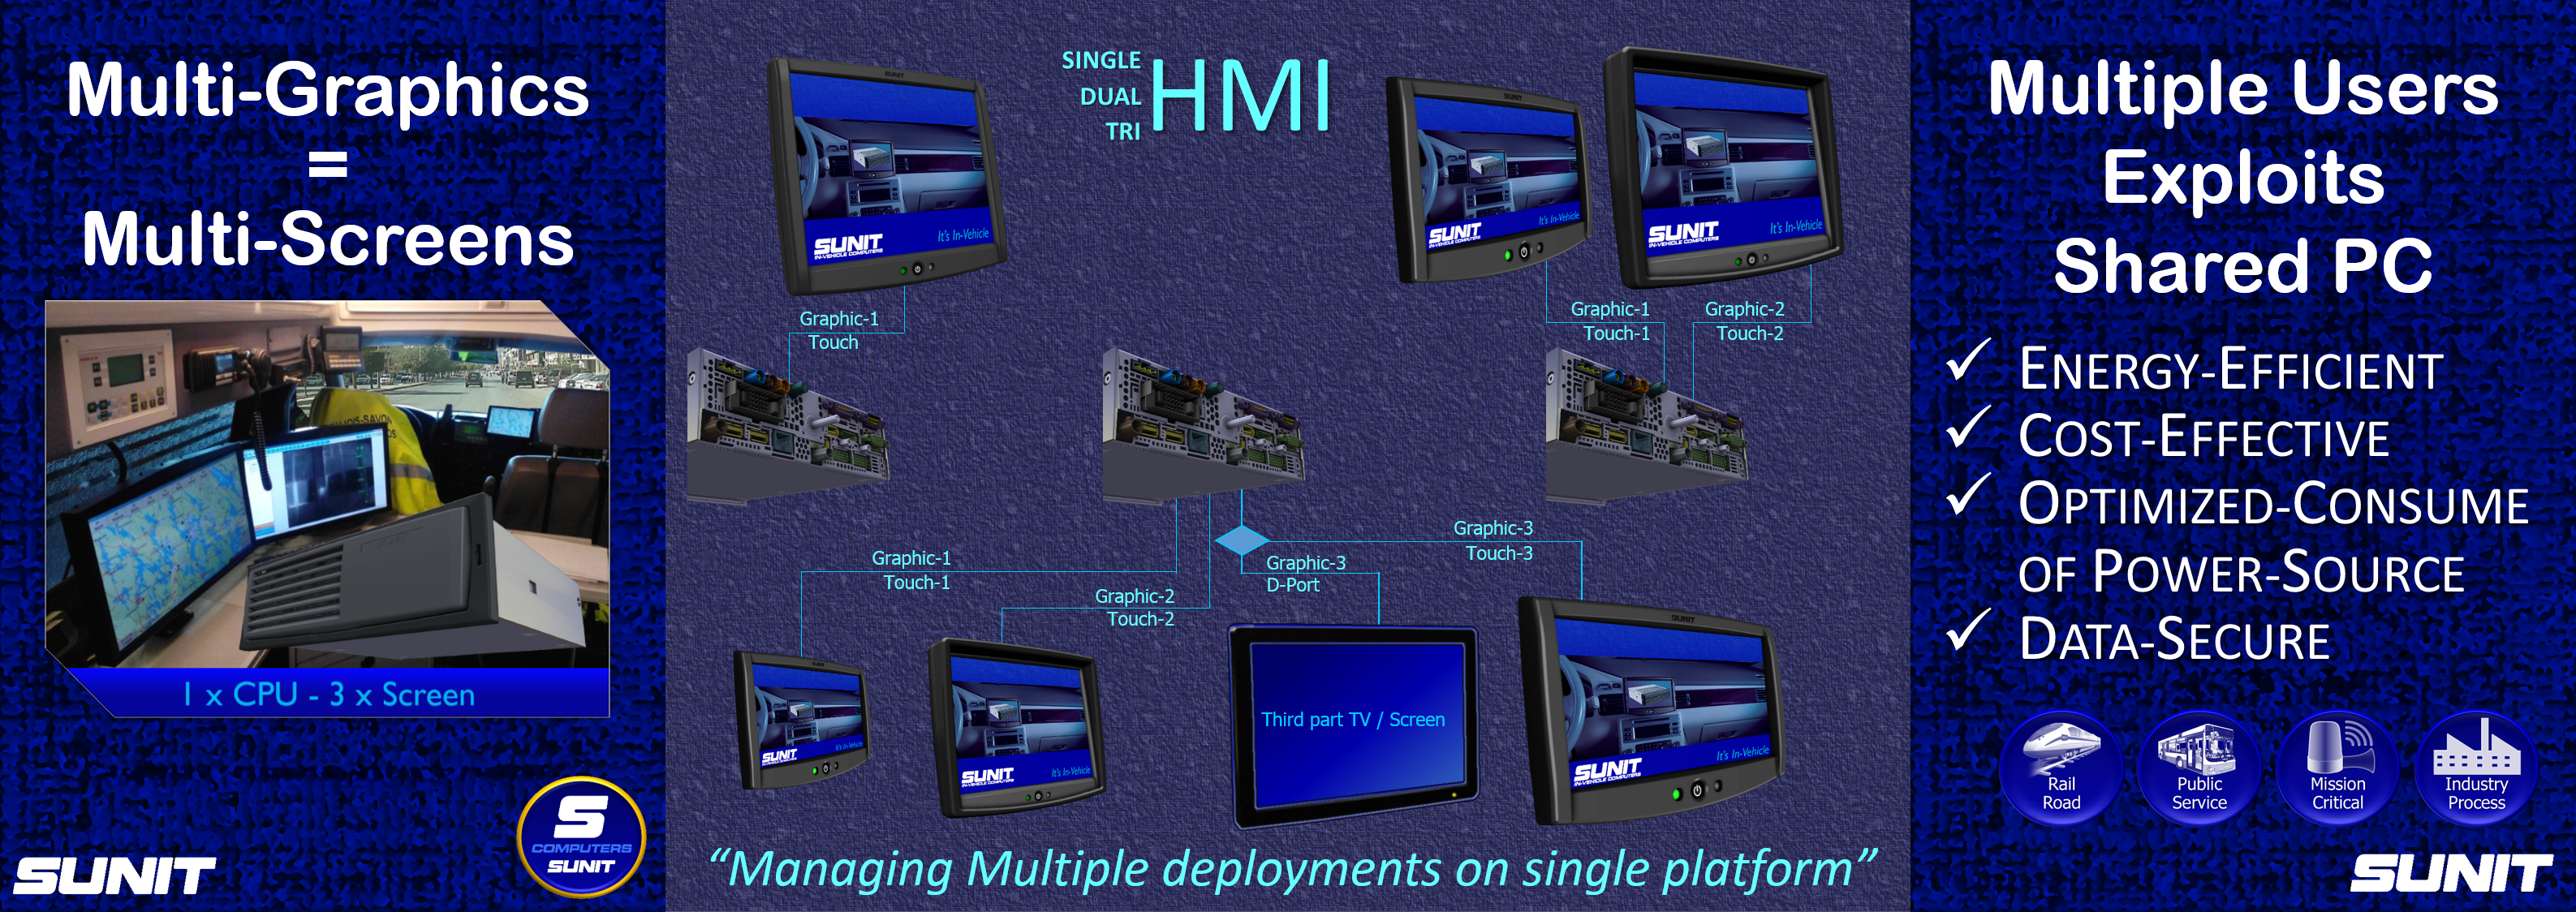 SUNIT HMI Technology by Multi-Screens